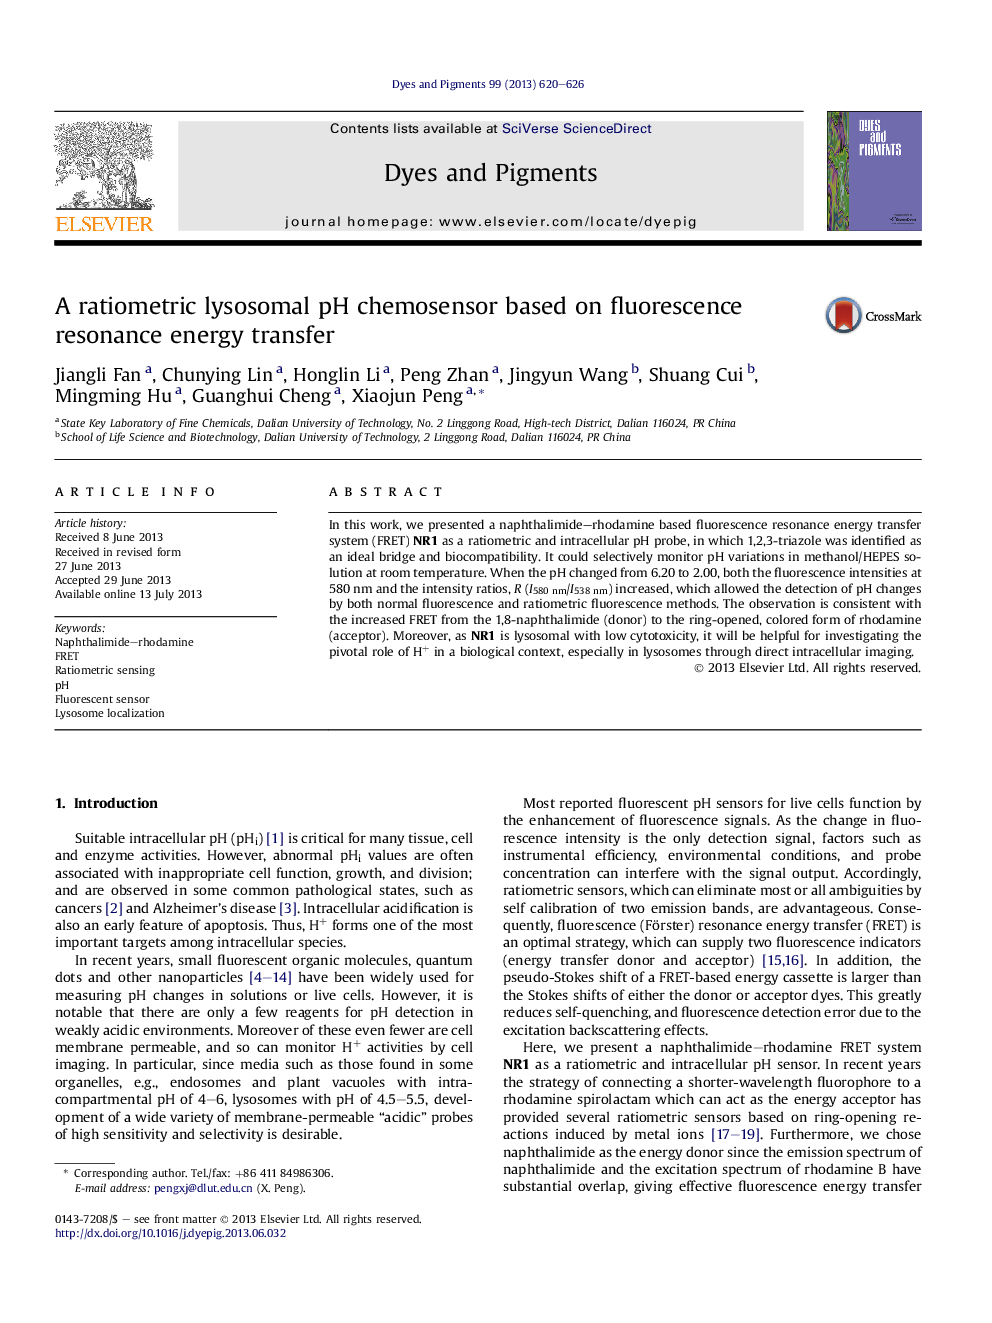 A ratiometric lysosomal pH chemosensor based on fluorescence resonance energy transfer